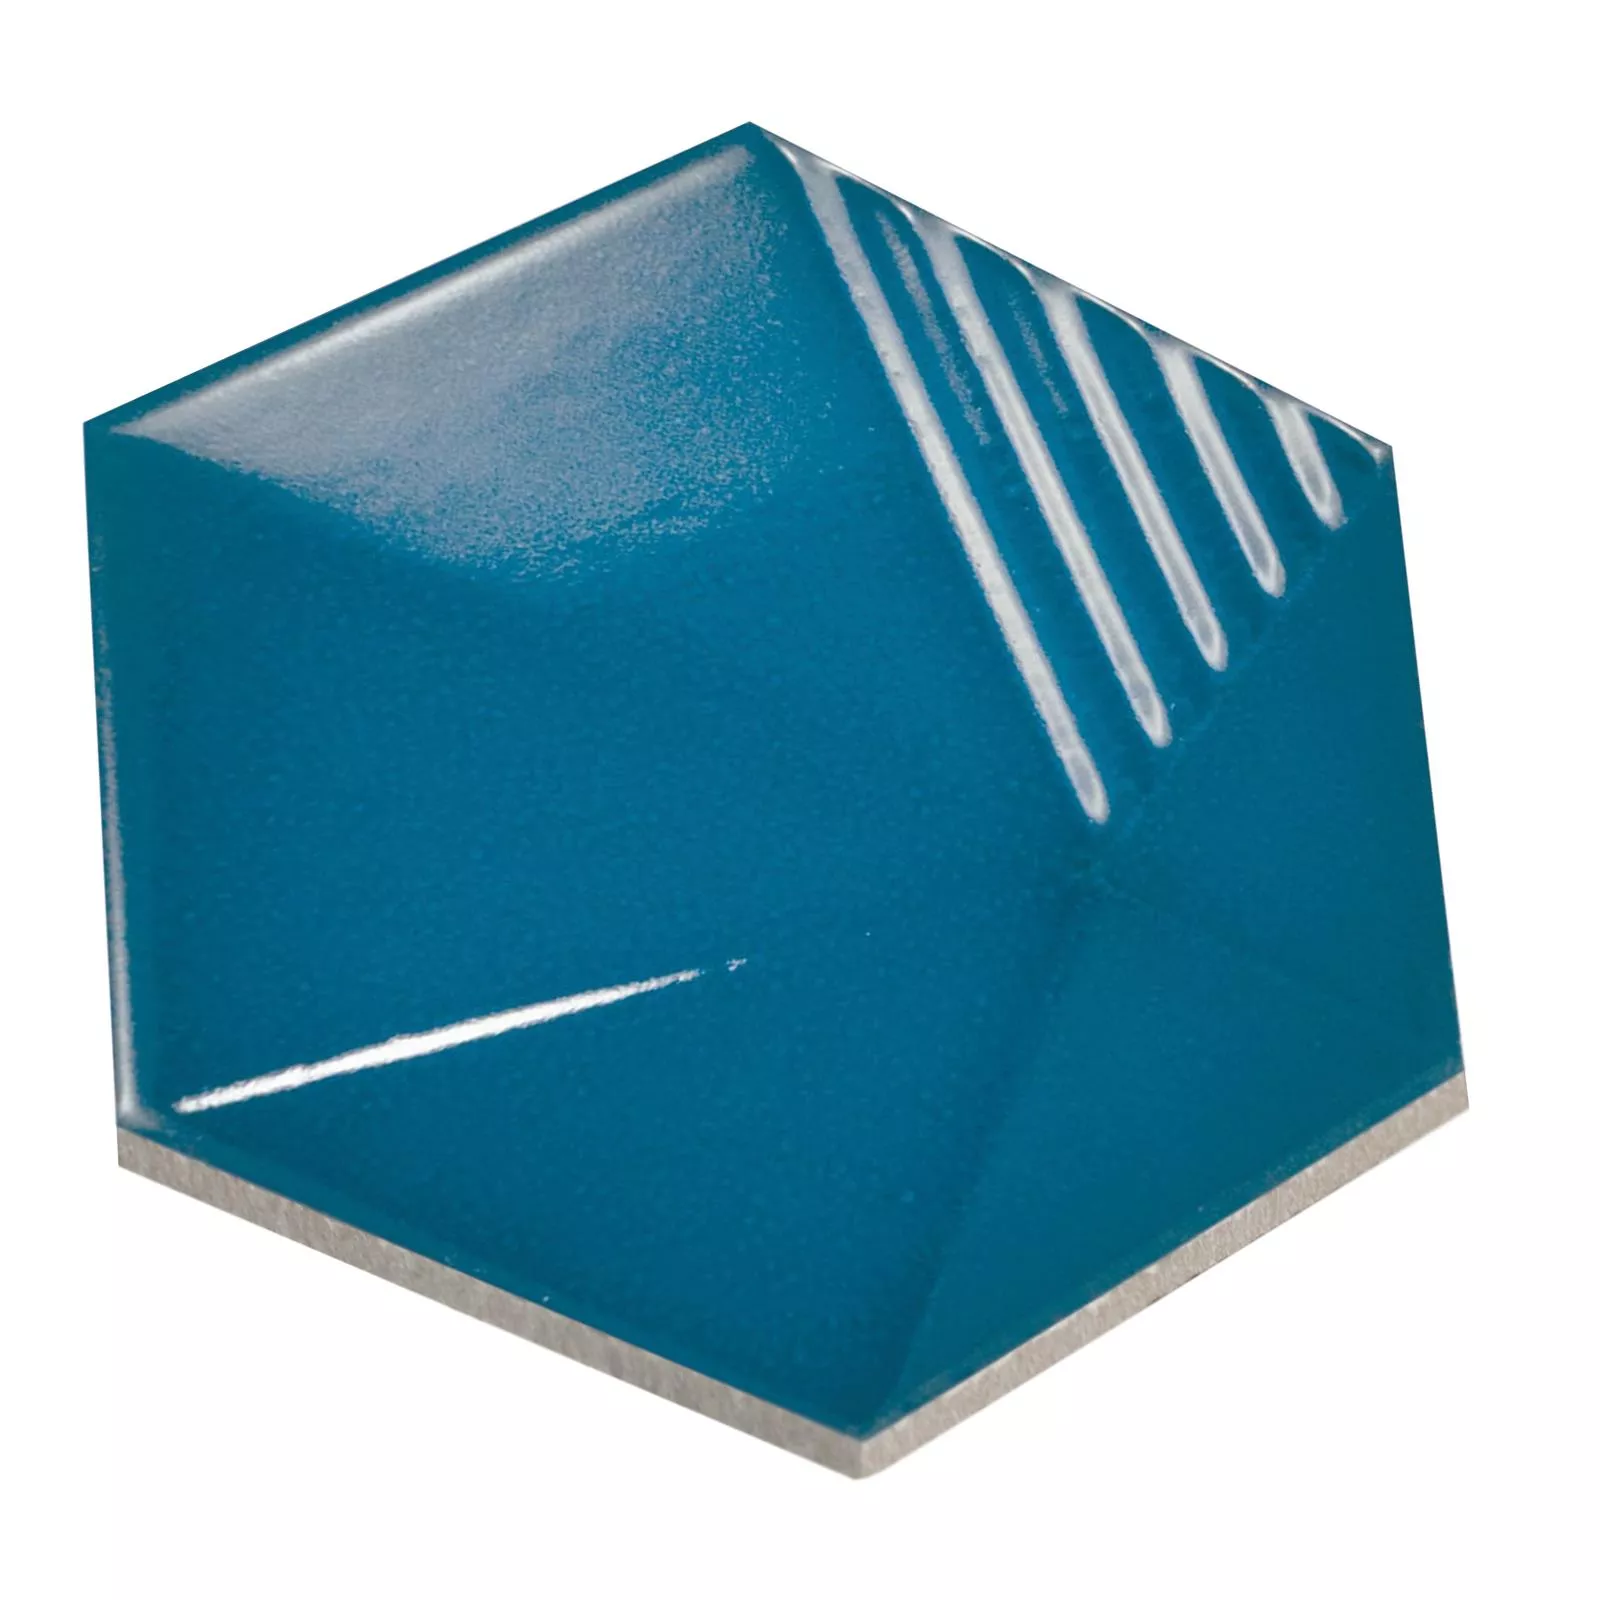 Sample Wall Tiles Rockford 3D Hexagon 12,4x10,7cm Blue